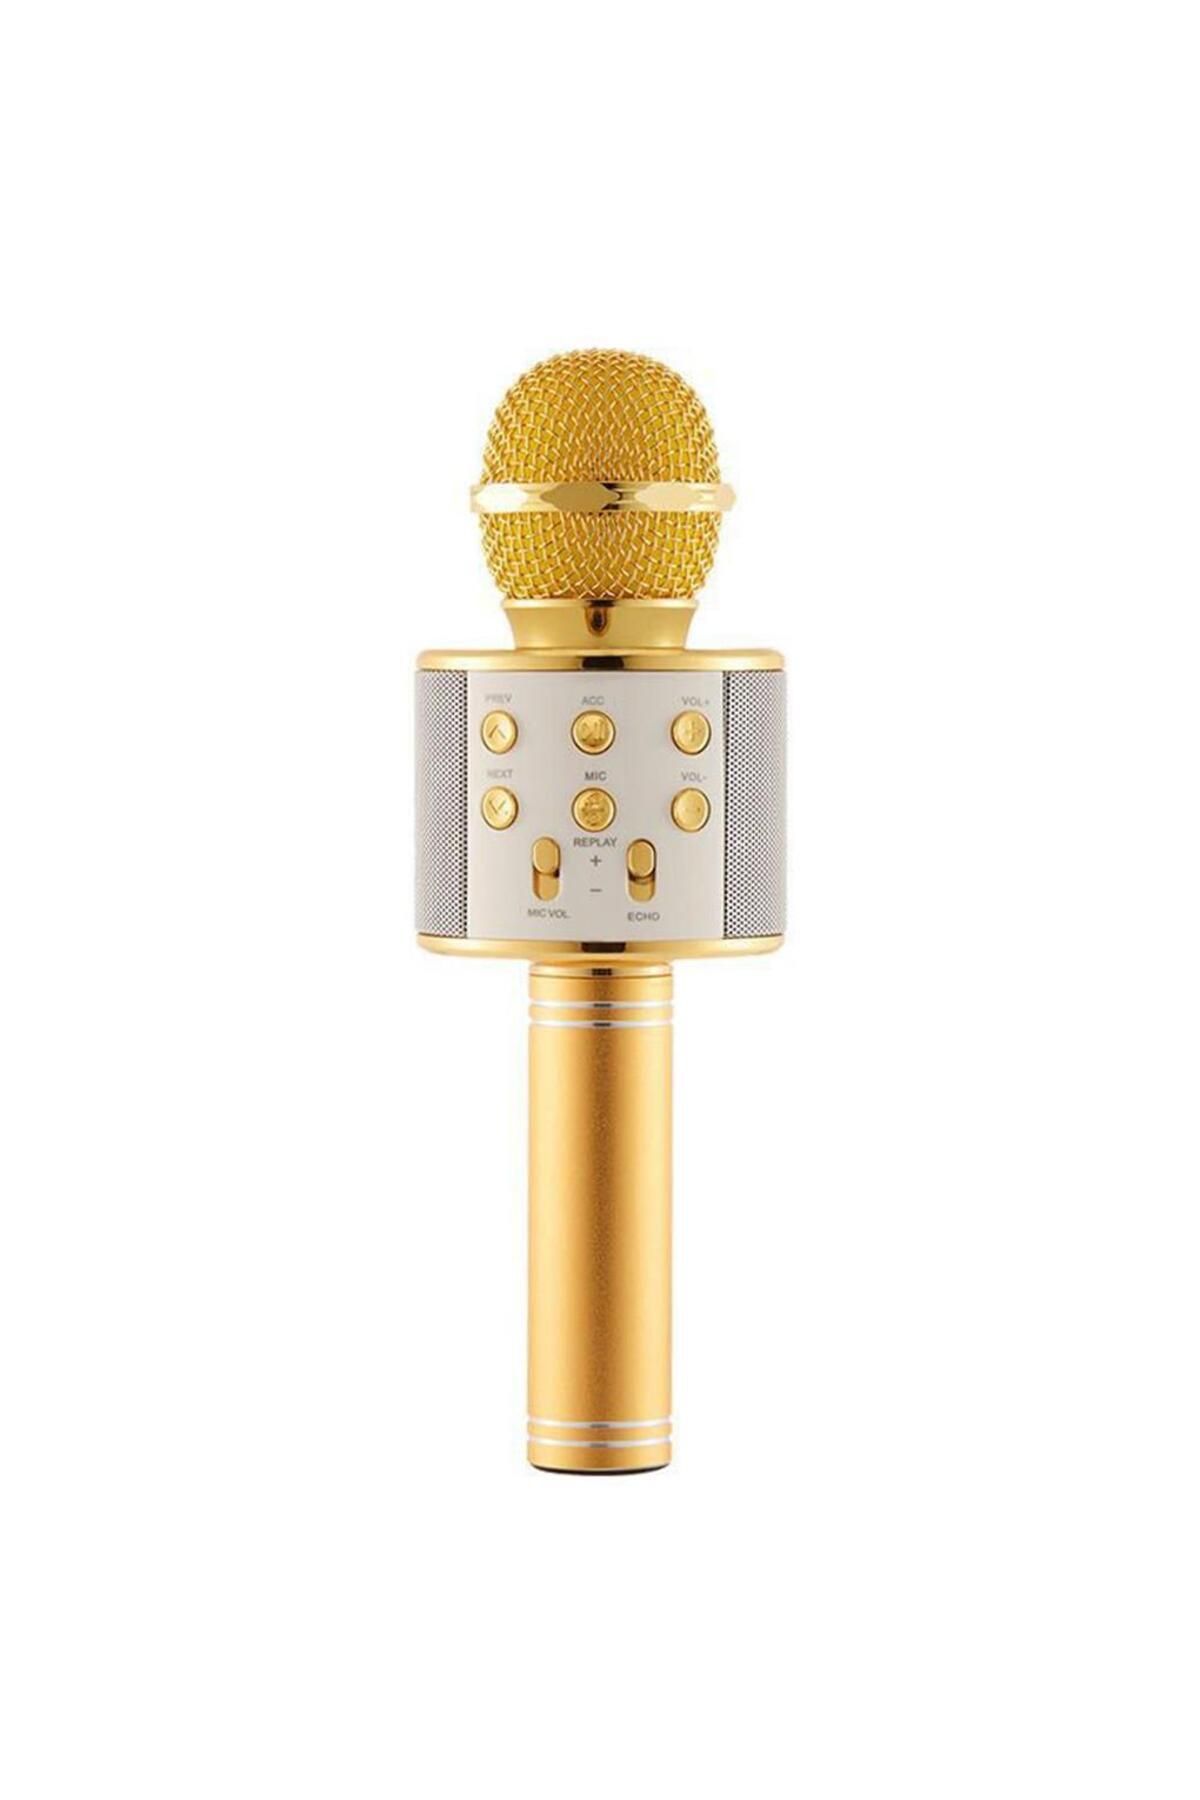 Torima WS-858 Karaoke Mikrofon Aux Usb Ve Sd Kart Girişli Bluetooth Hoparlör Gold